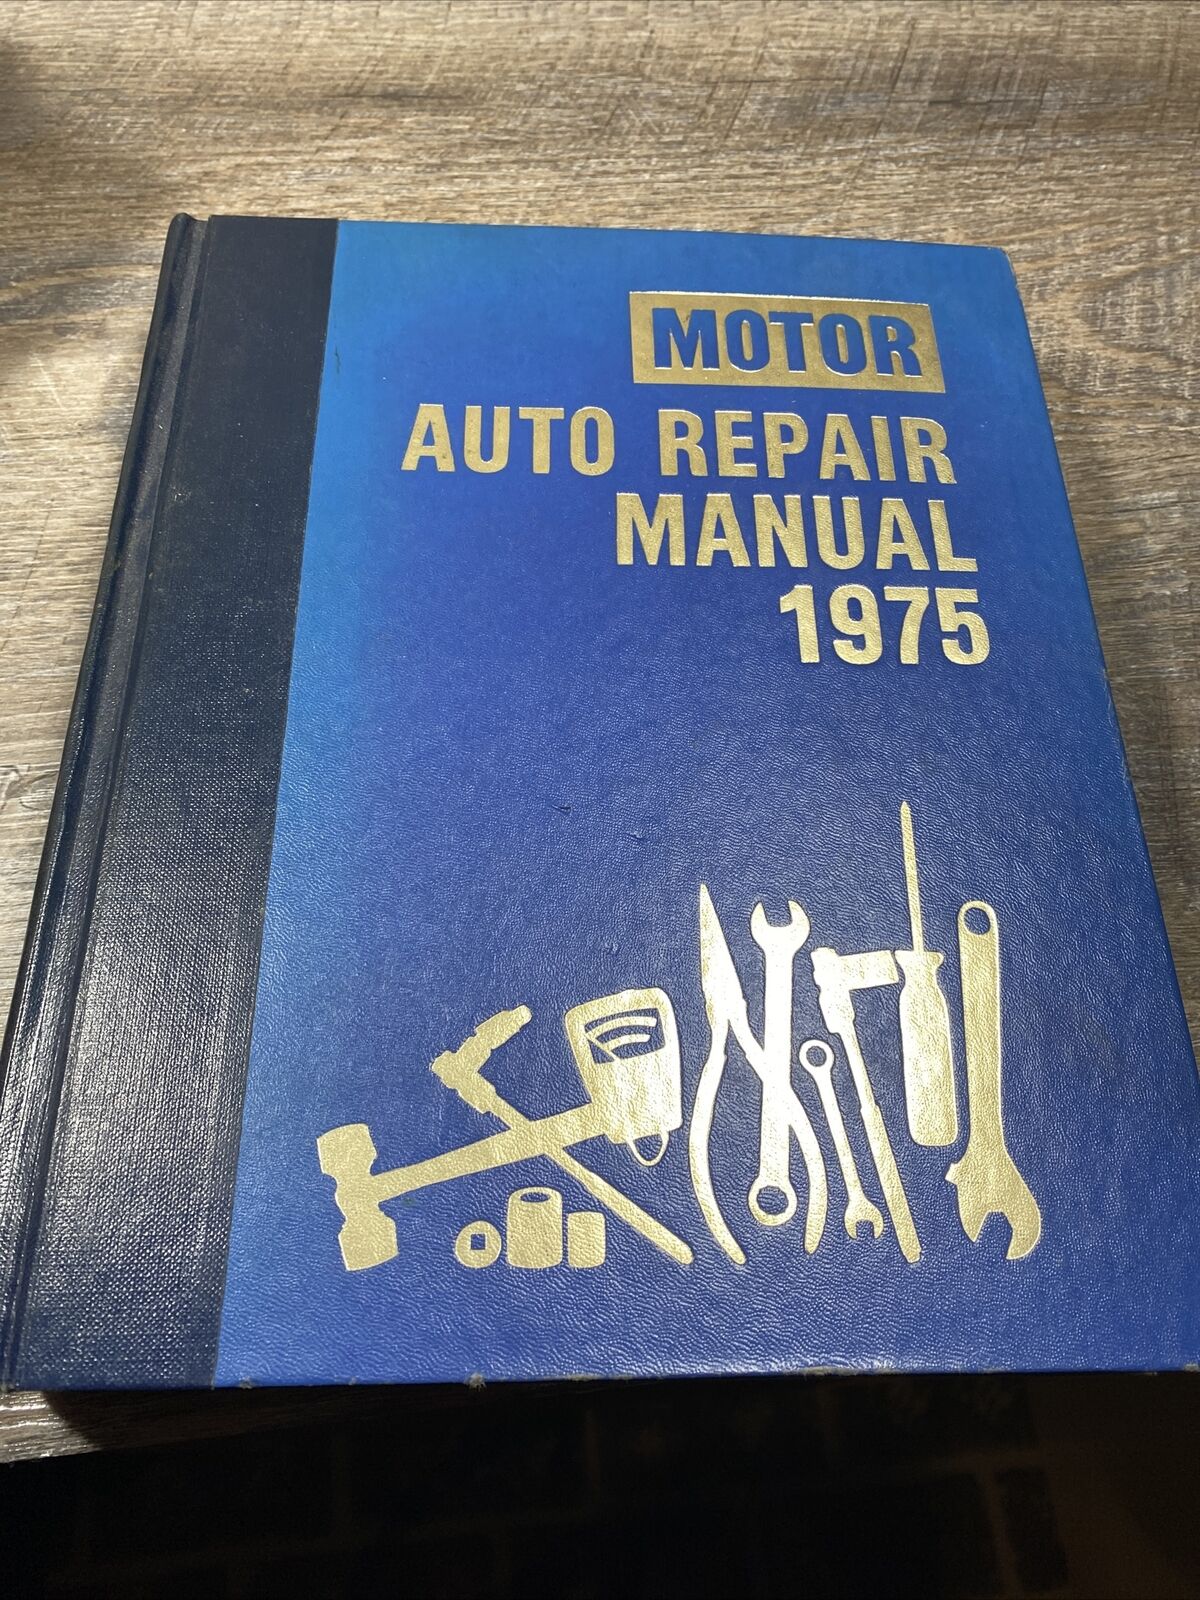 1975 MOTOR Auto Repair Manual 38th Edition US Car Service Manual Book 